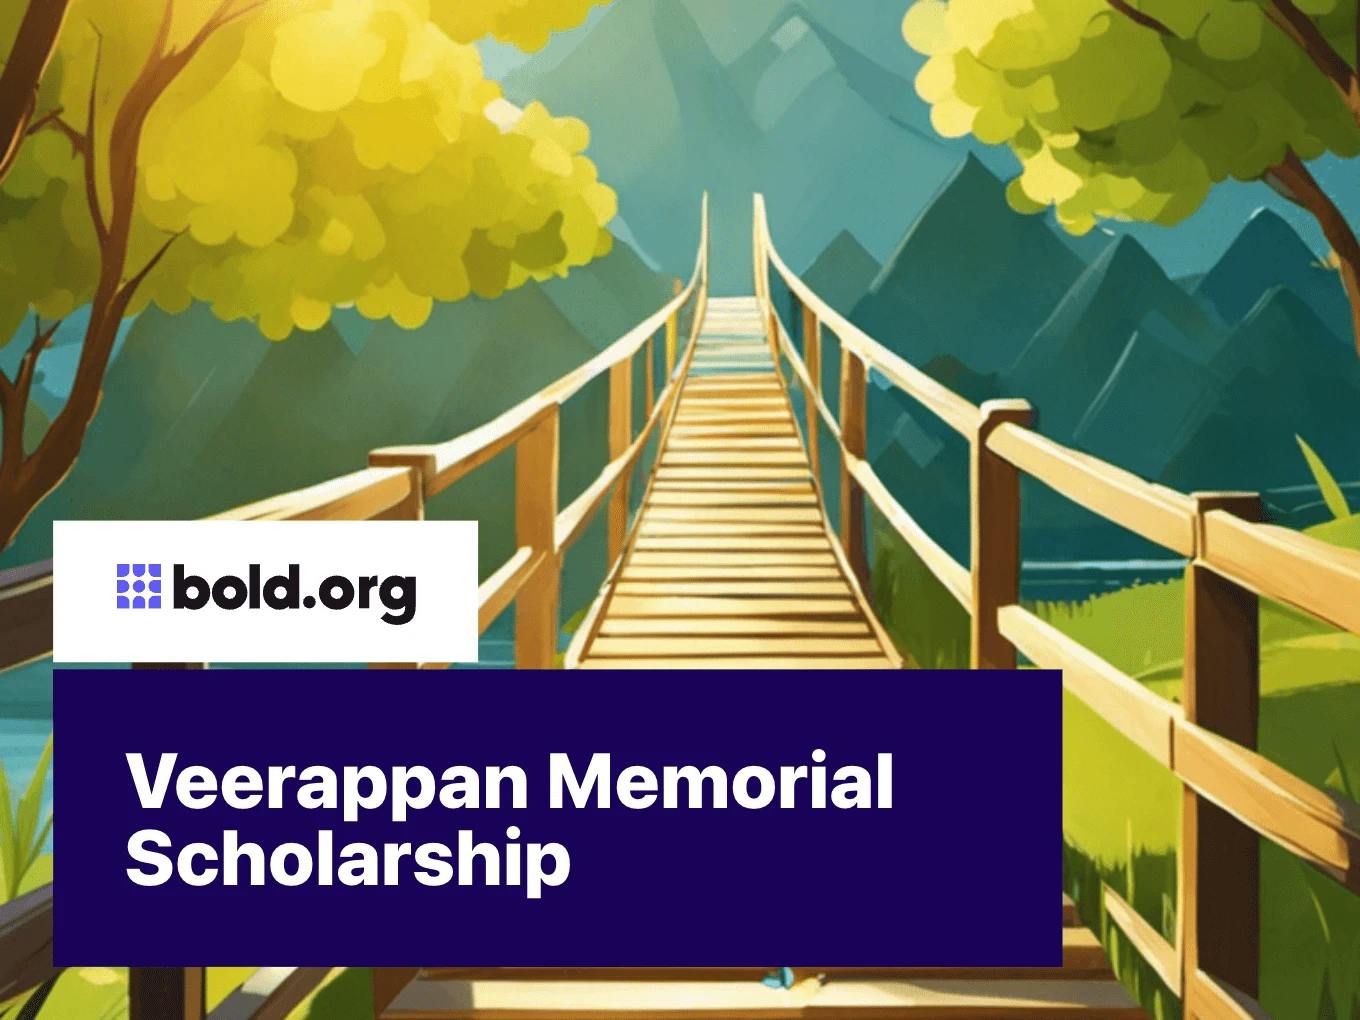 Veerappan Memorial Scholarship